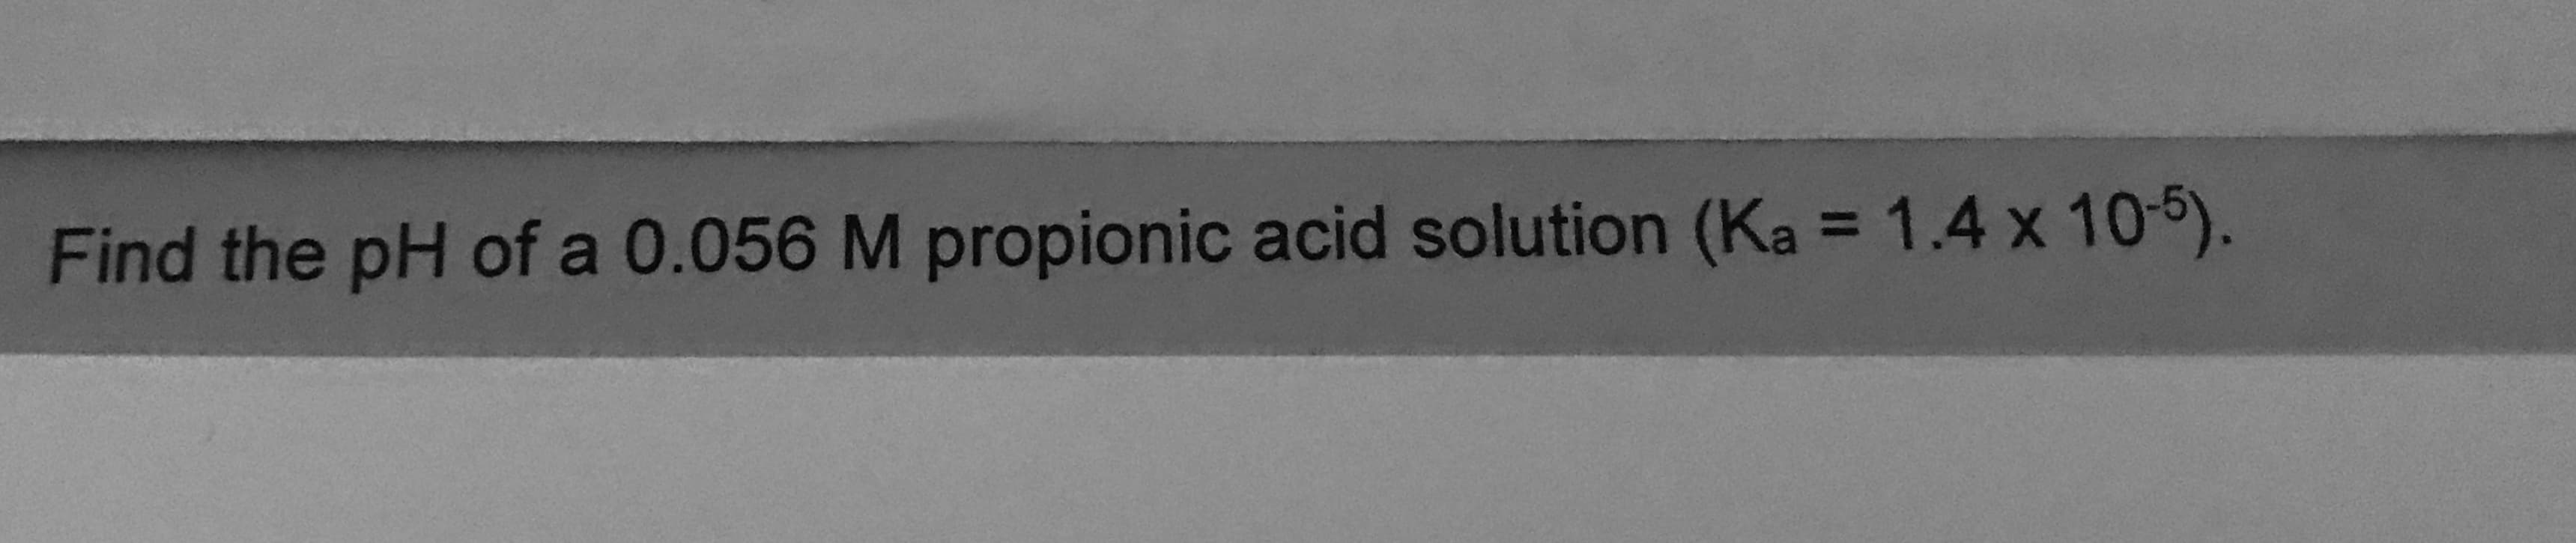 Find the pH of a 0.056 M propionic acid solution (Ka = 1.4 x 10-5).
%3D
